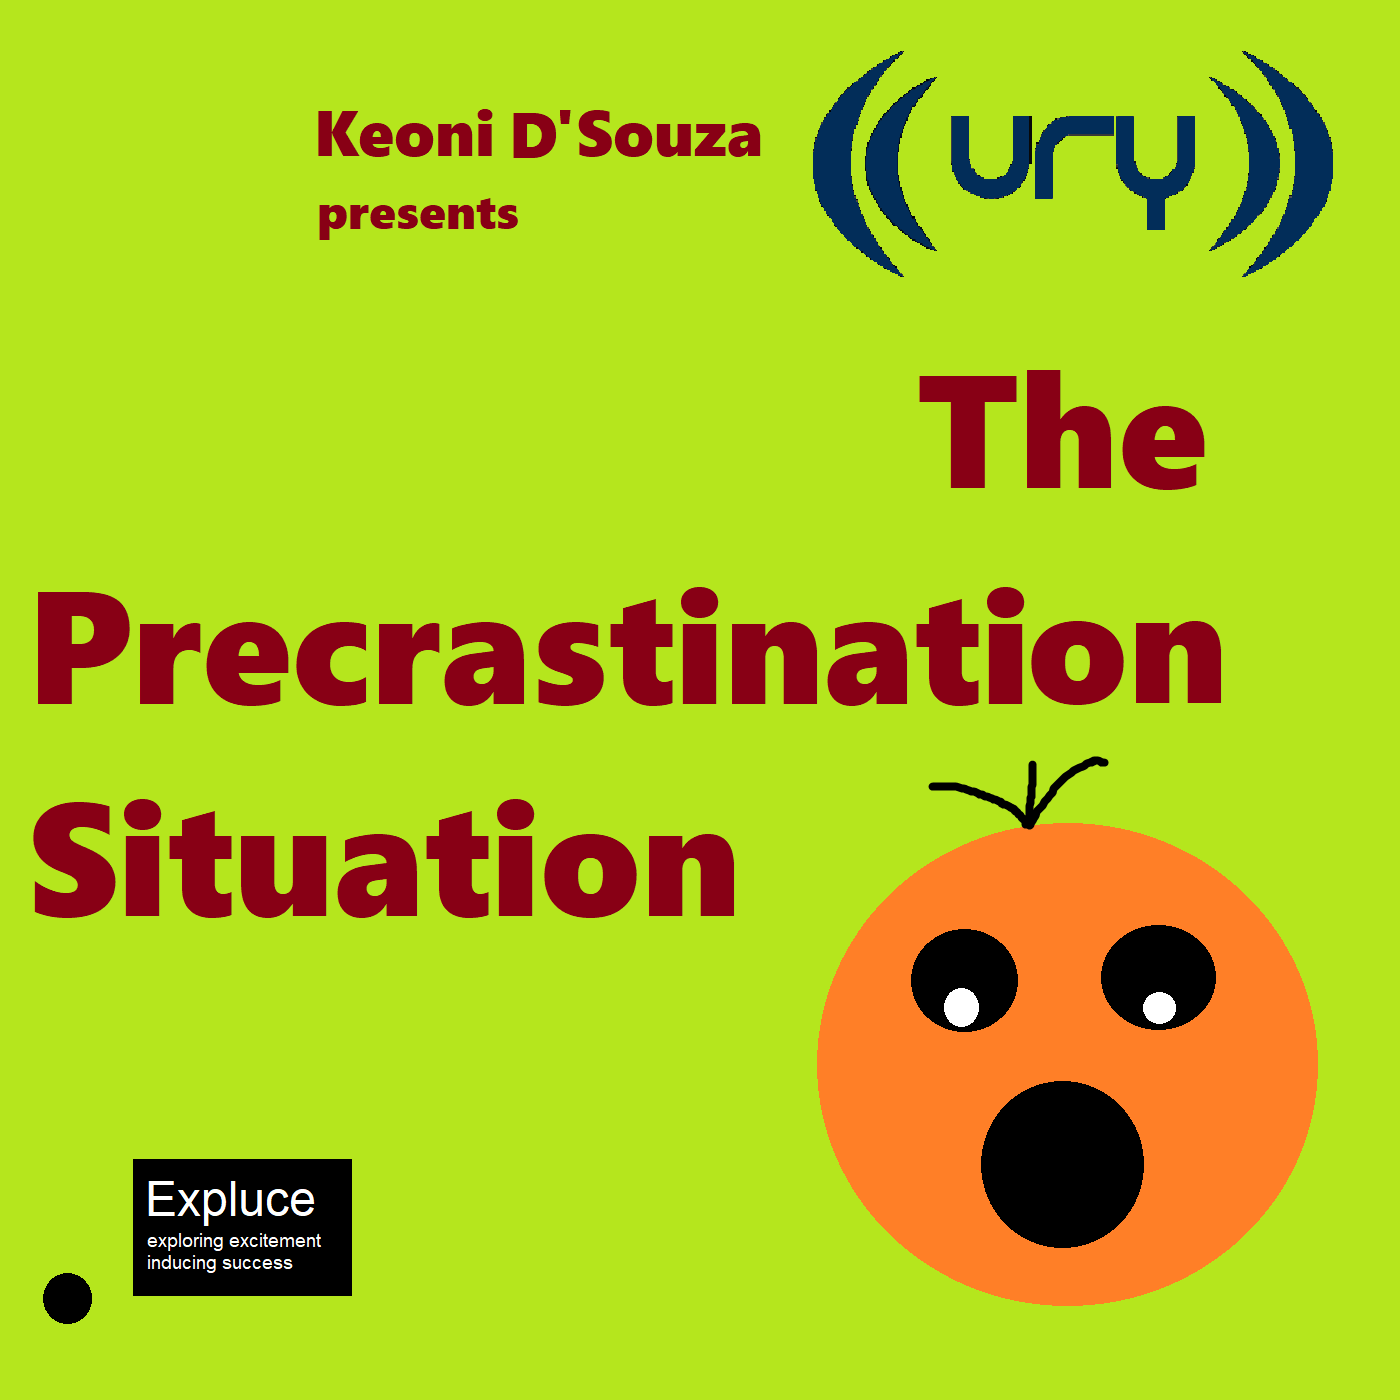 The Precrastination Situation